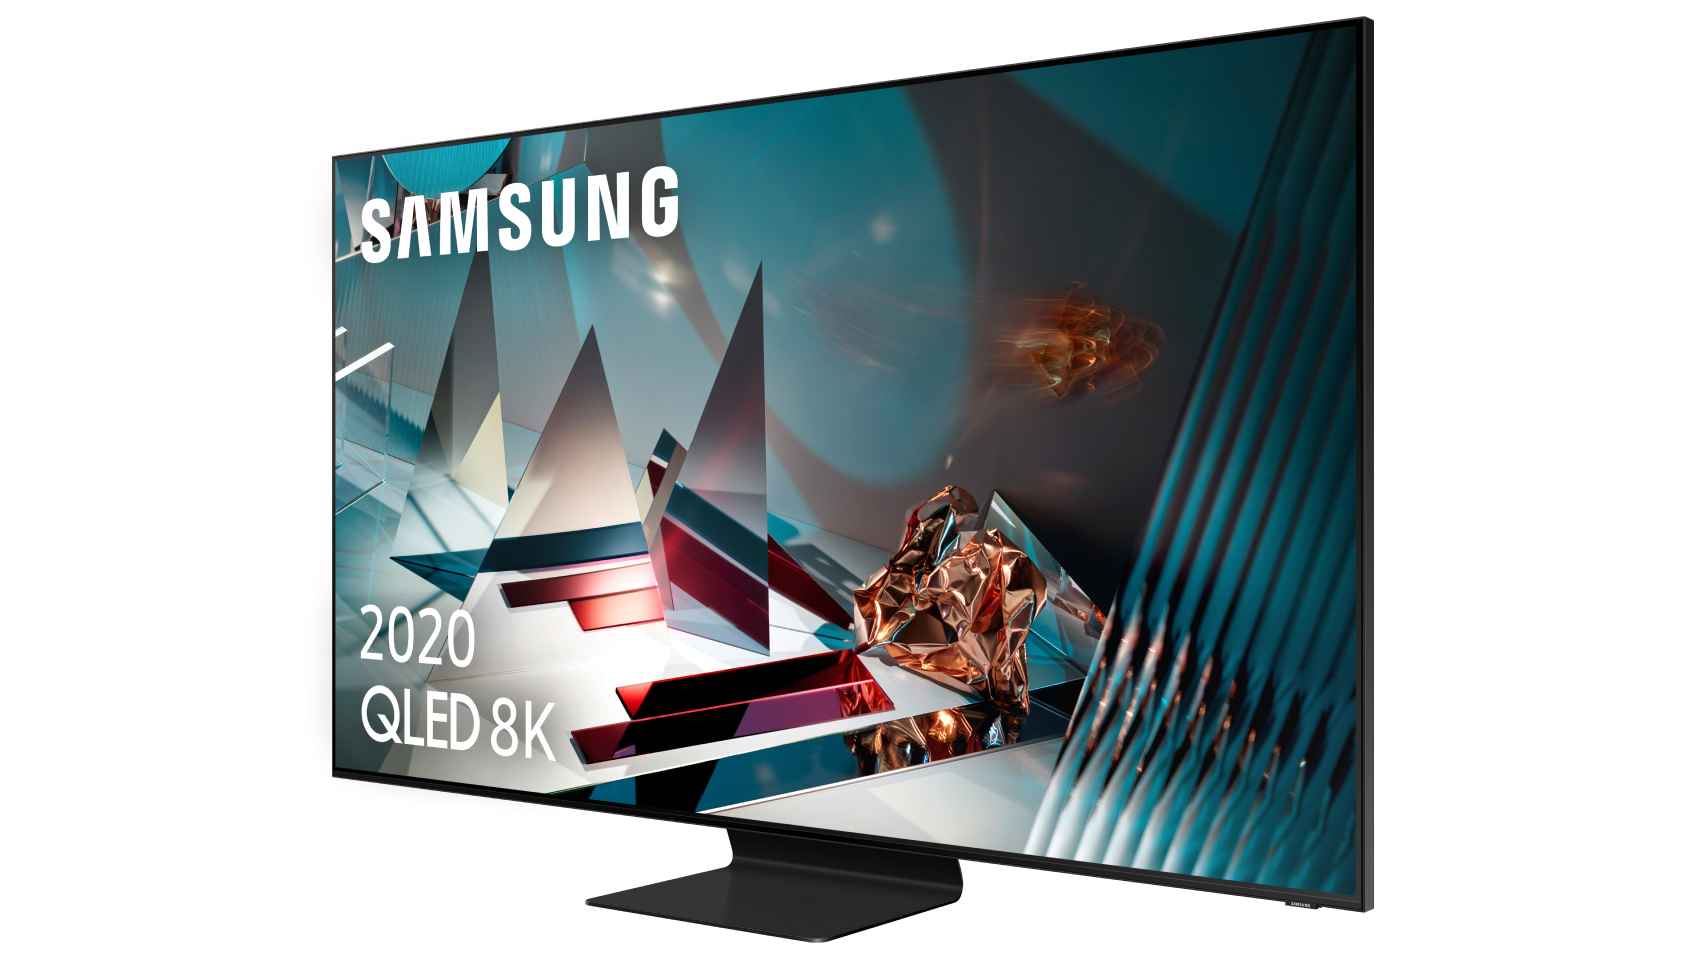 TV QLED 8K Samsung